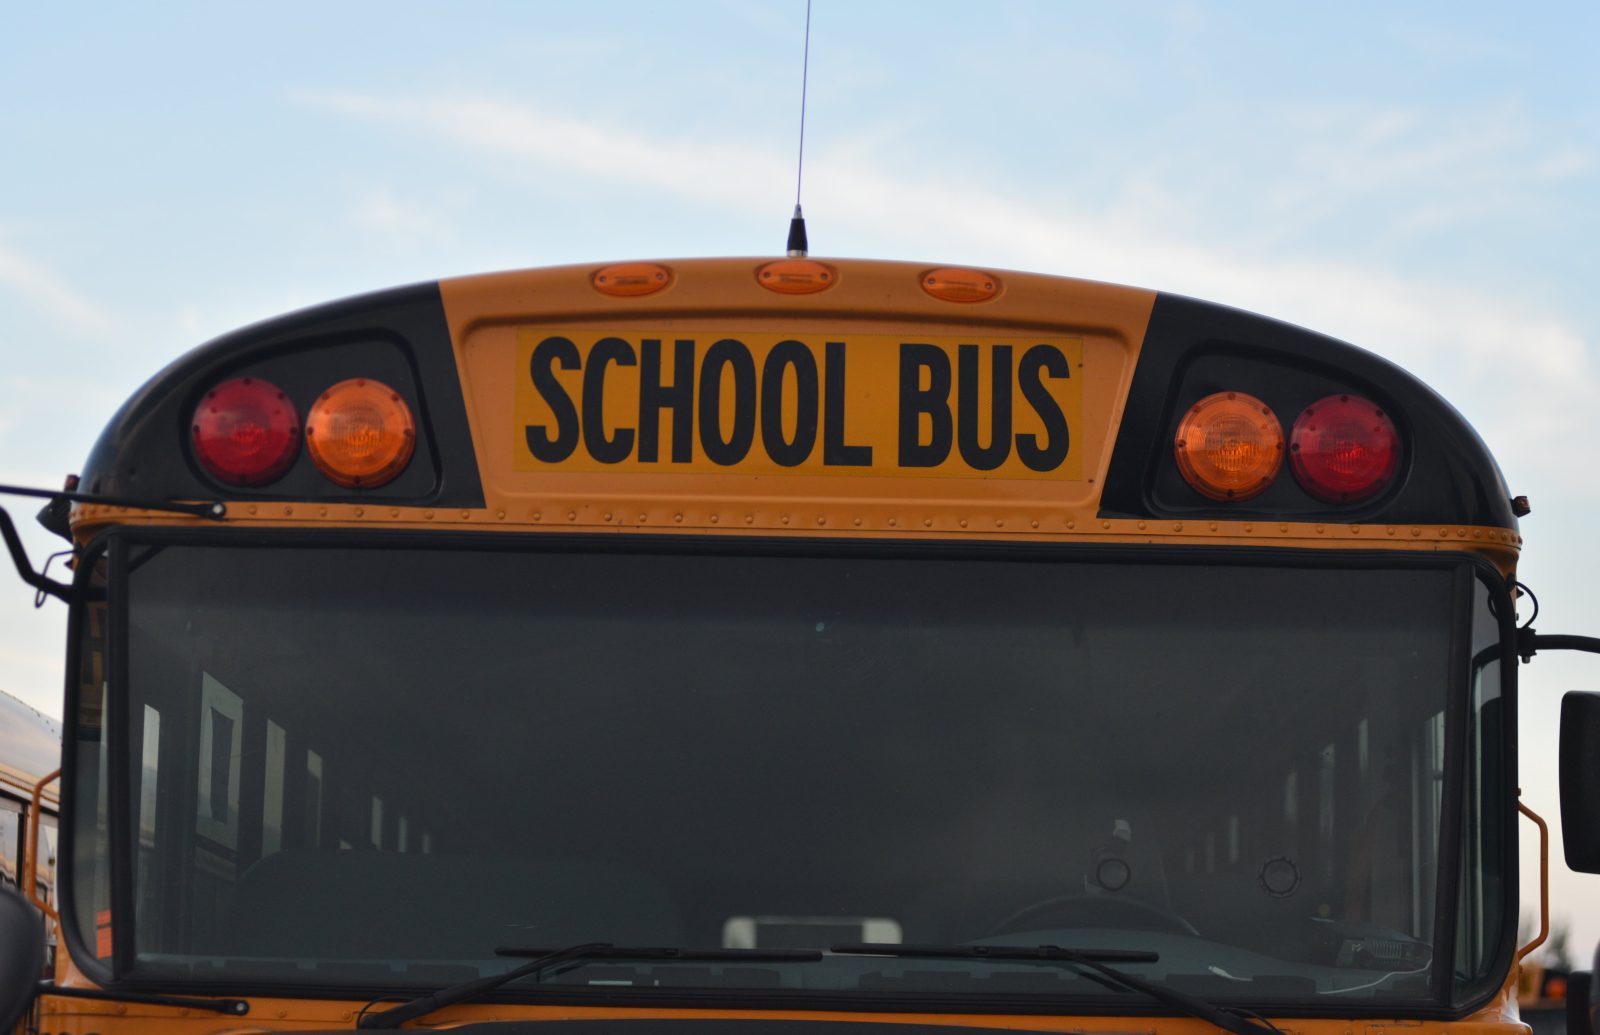 STEO and school bus operators reach tentative deal